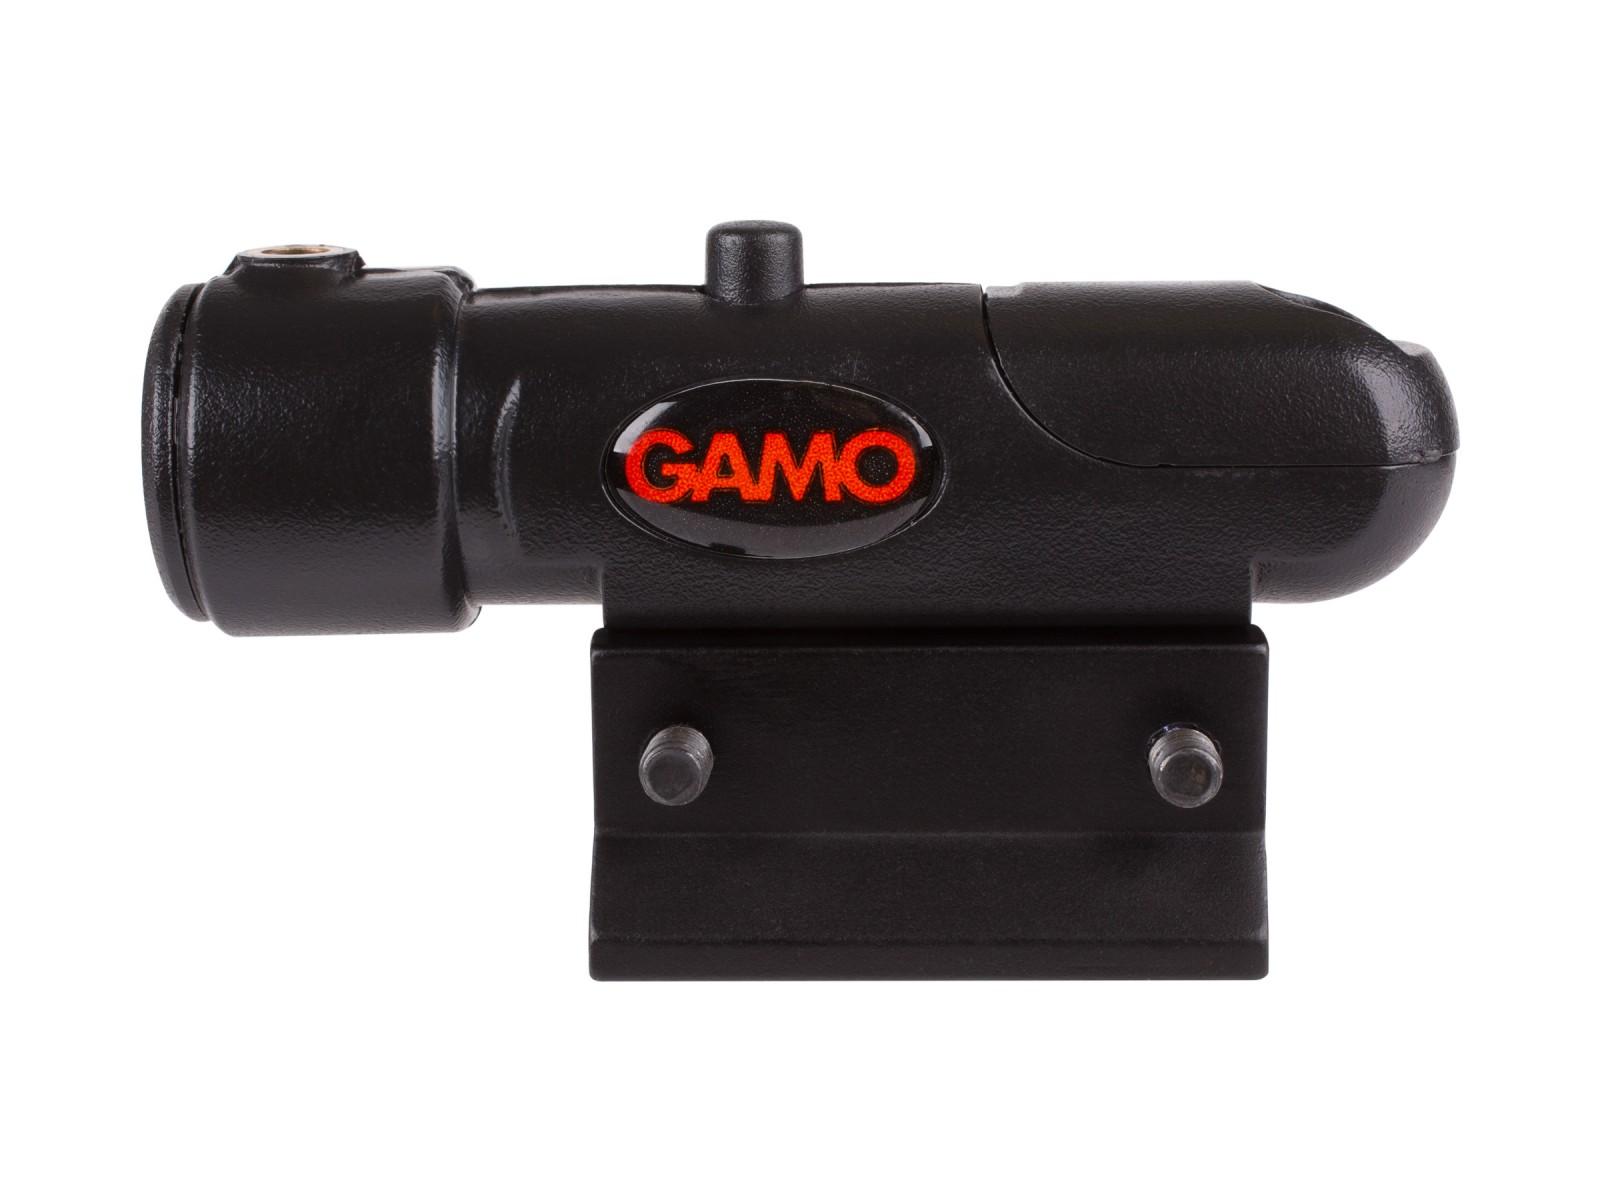 Gamo Red Laser Sight, Weaver Ring